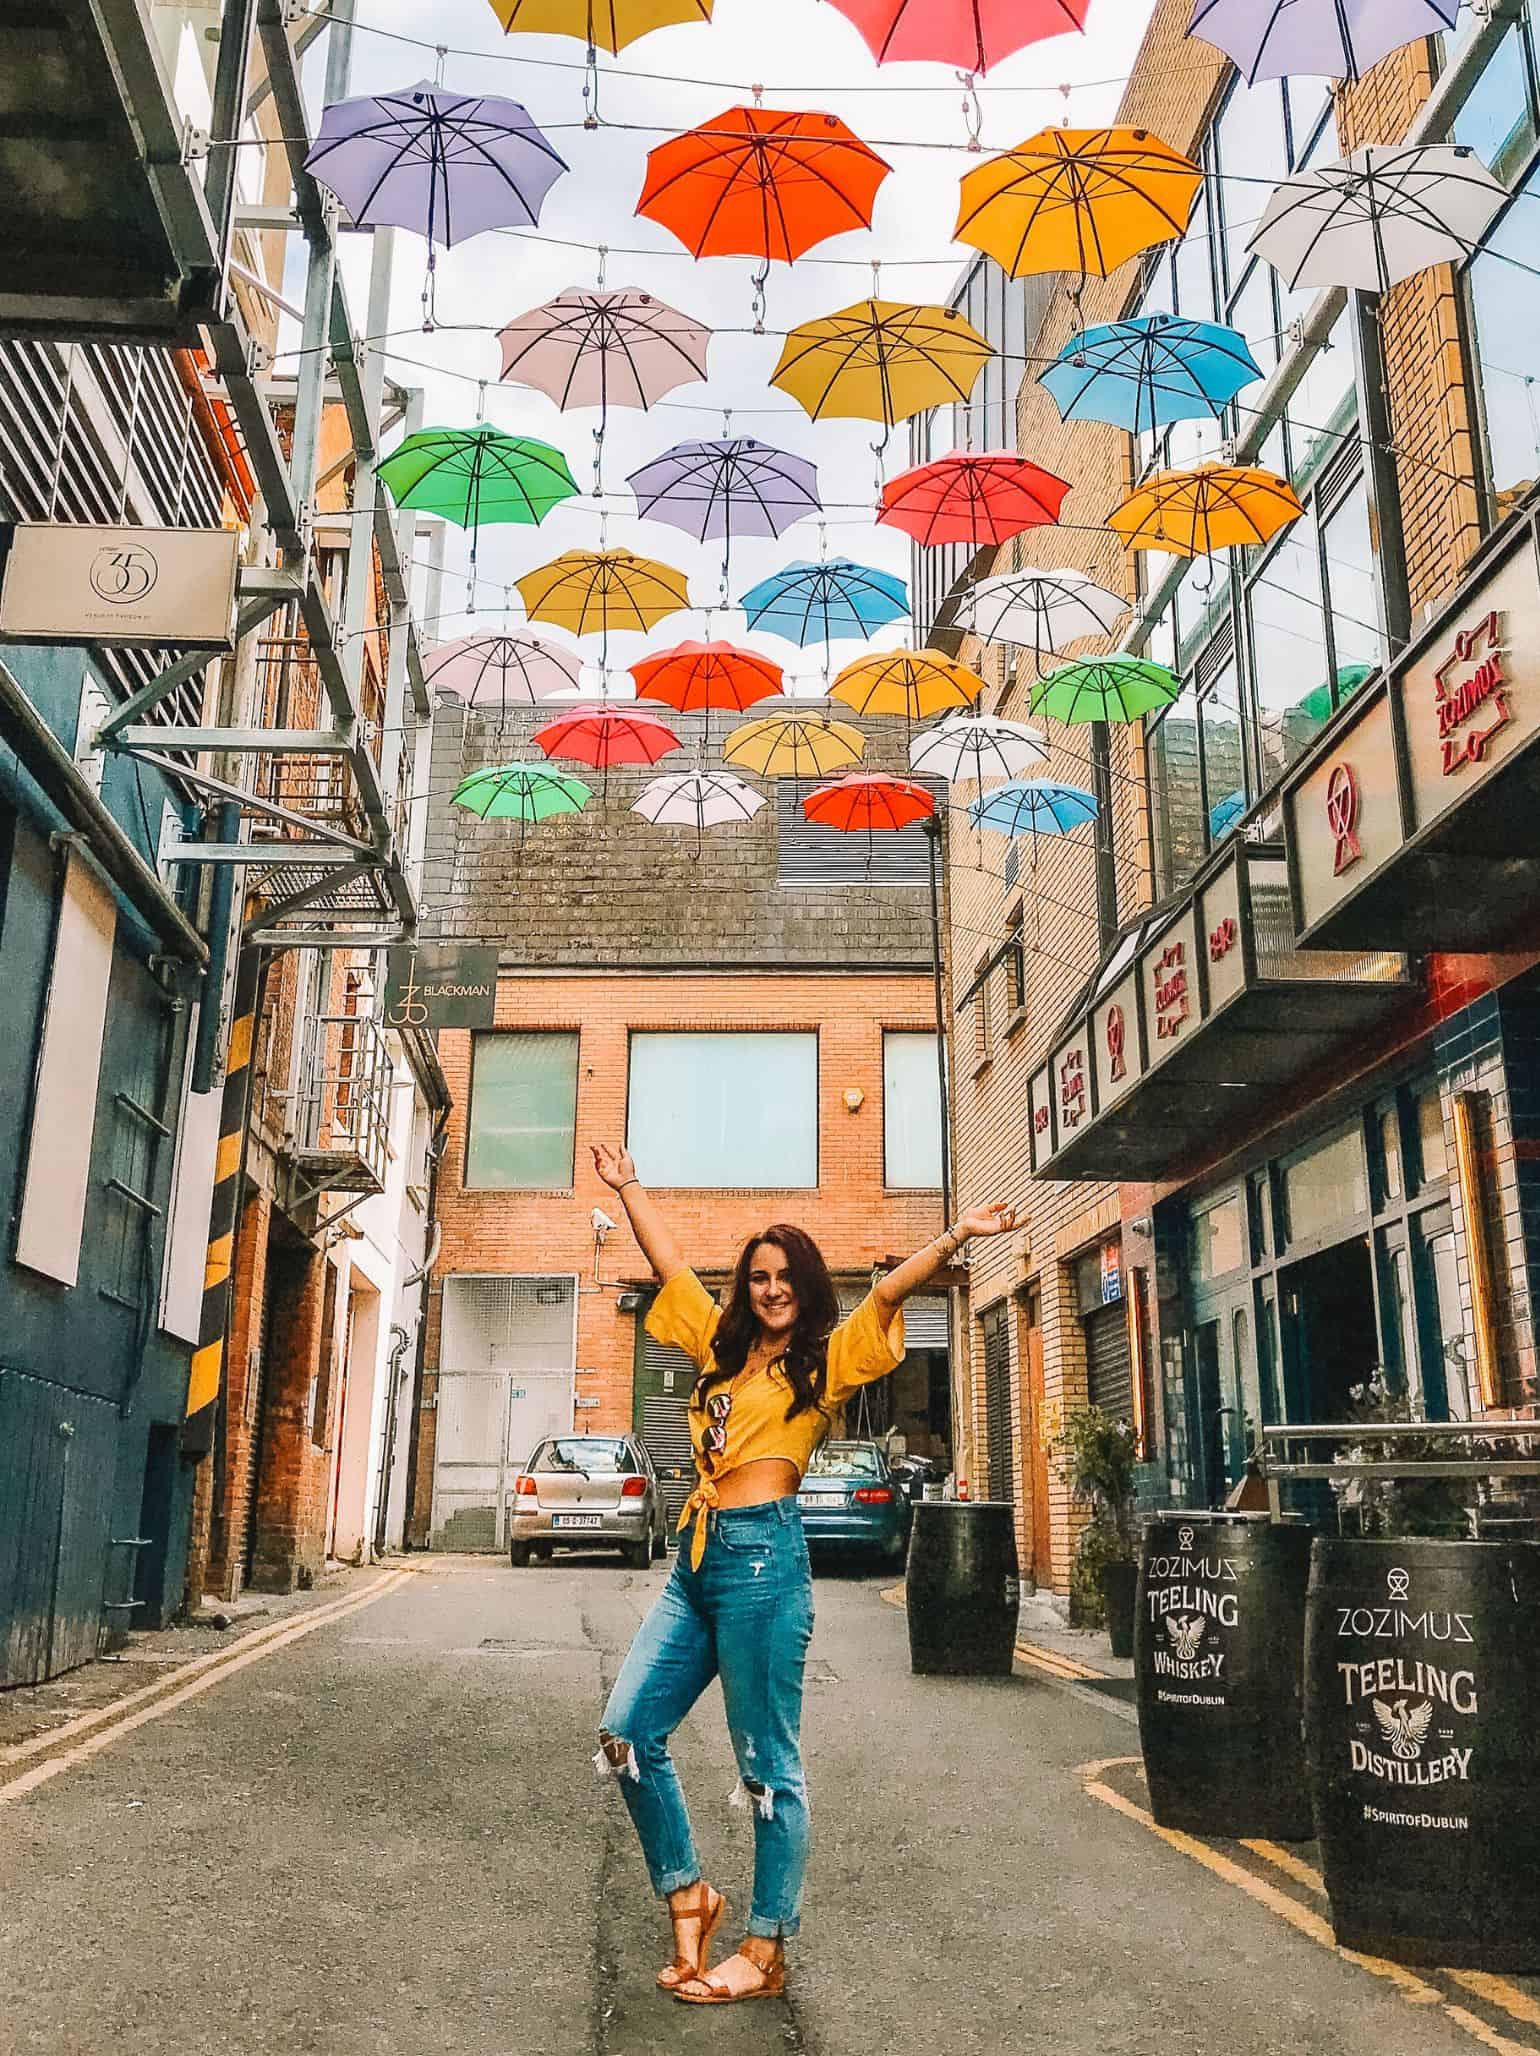 Me posing under the umbrellas on Anne's Lane. 